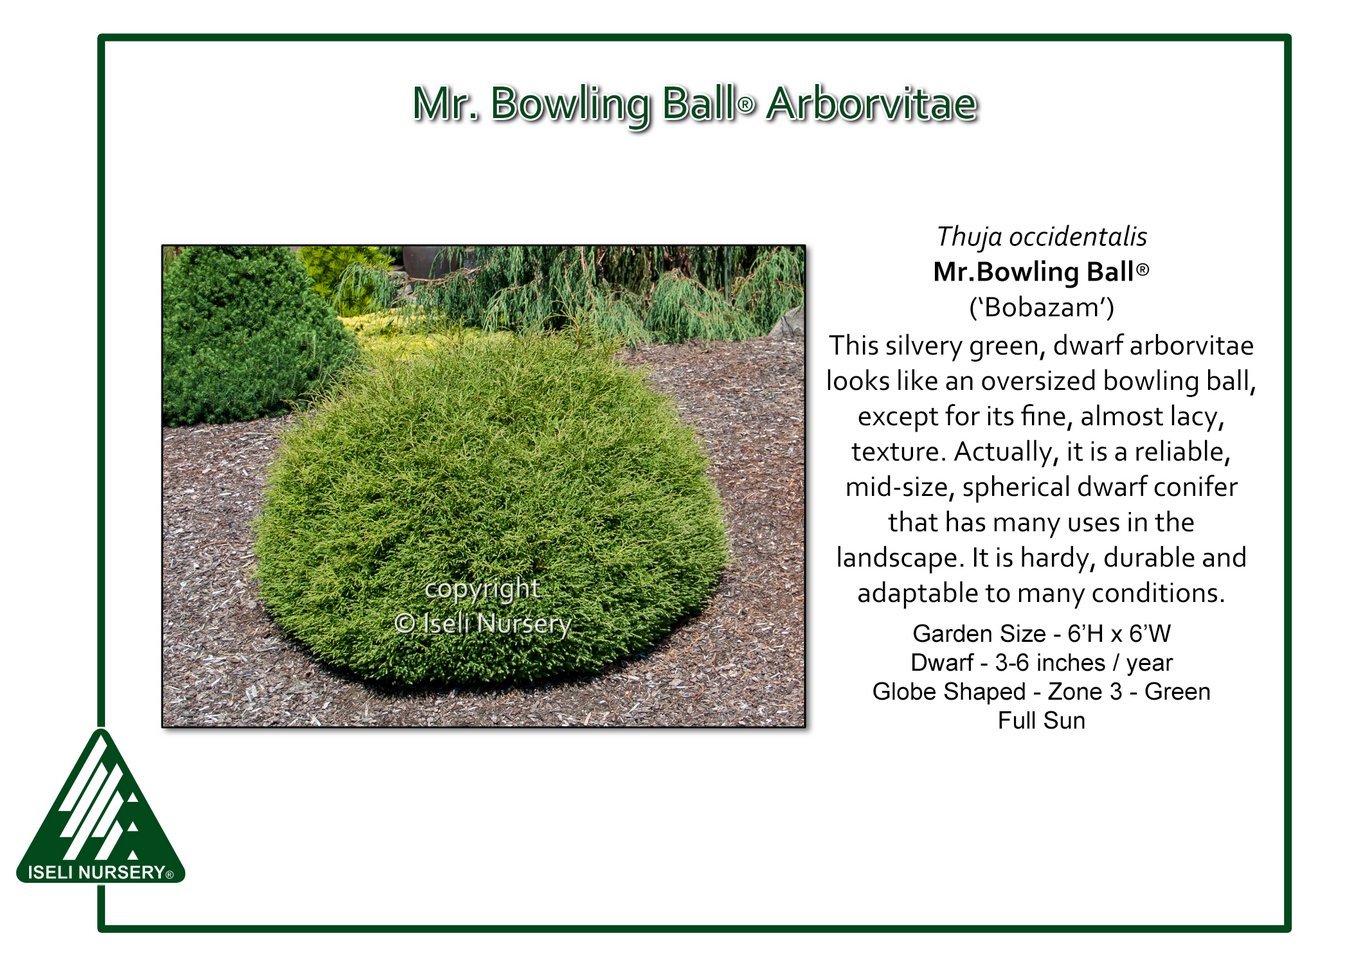 Image of Juniper companion plant for Mr Bowling Ball arborvitae